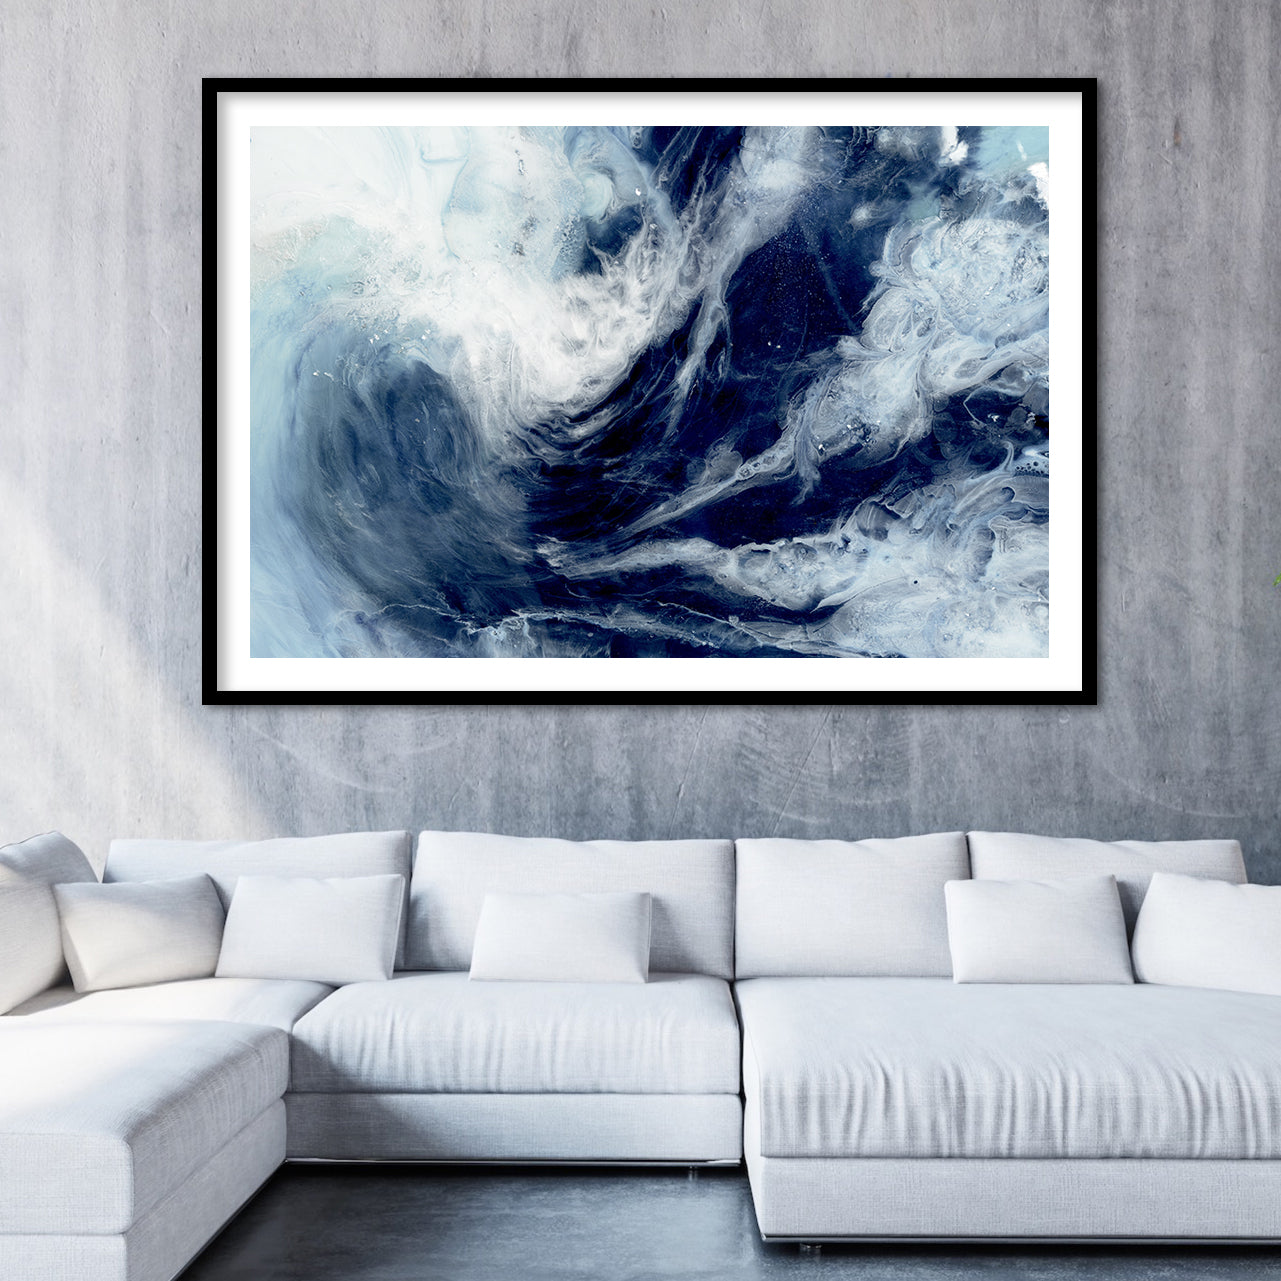 Abstract Sea. Black and White. Boro 5 Tornado. Art Print. Antuanelle 2 Boracay Dreams Limited Edition Print